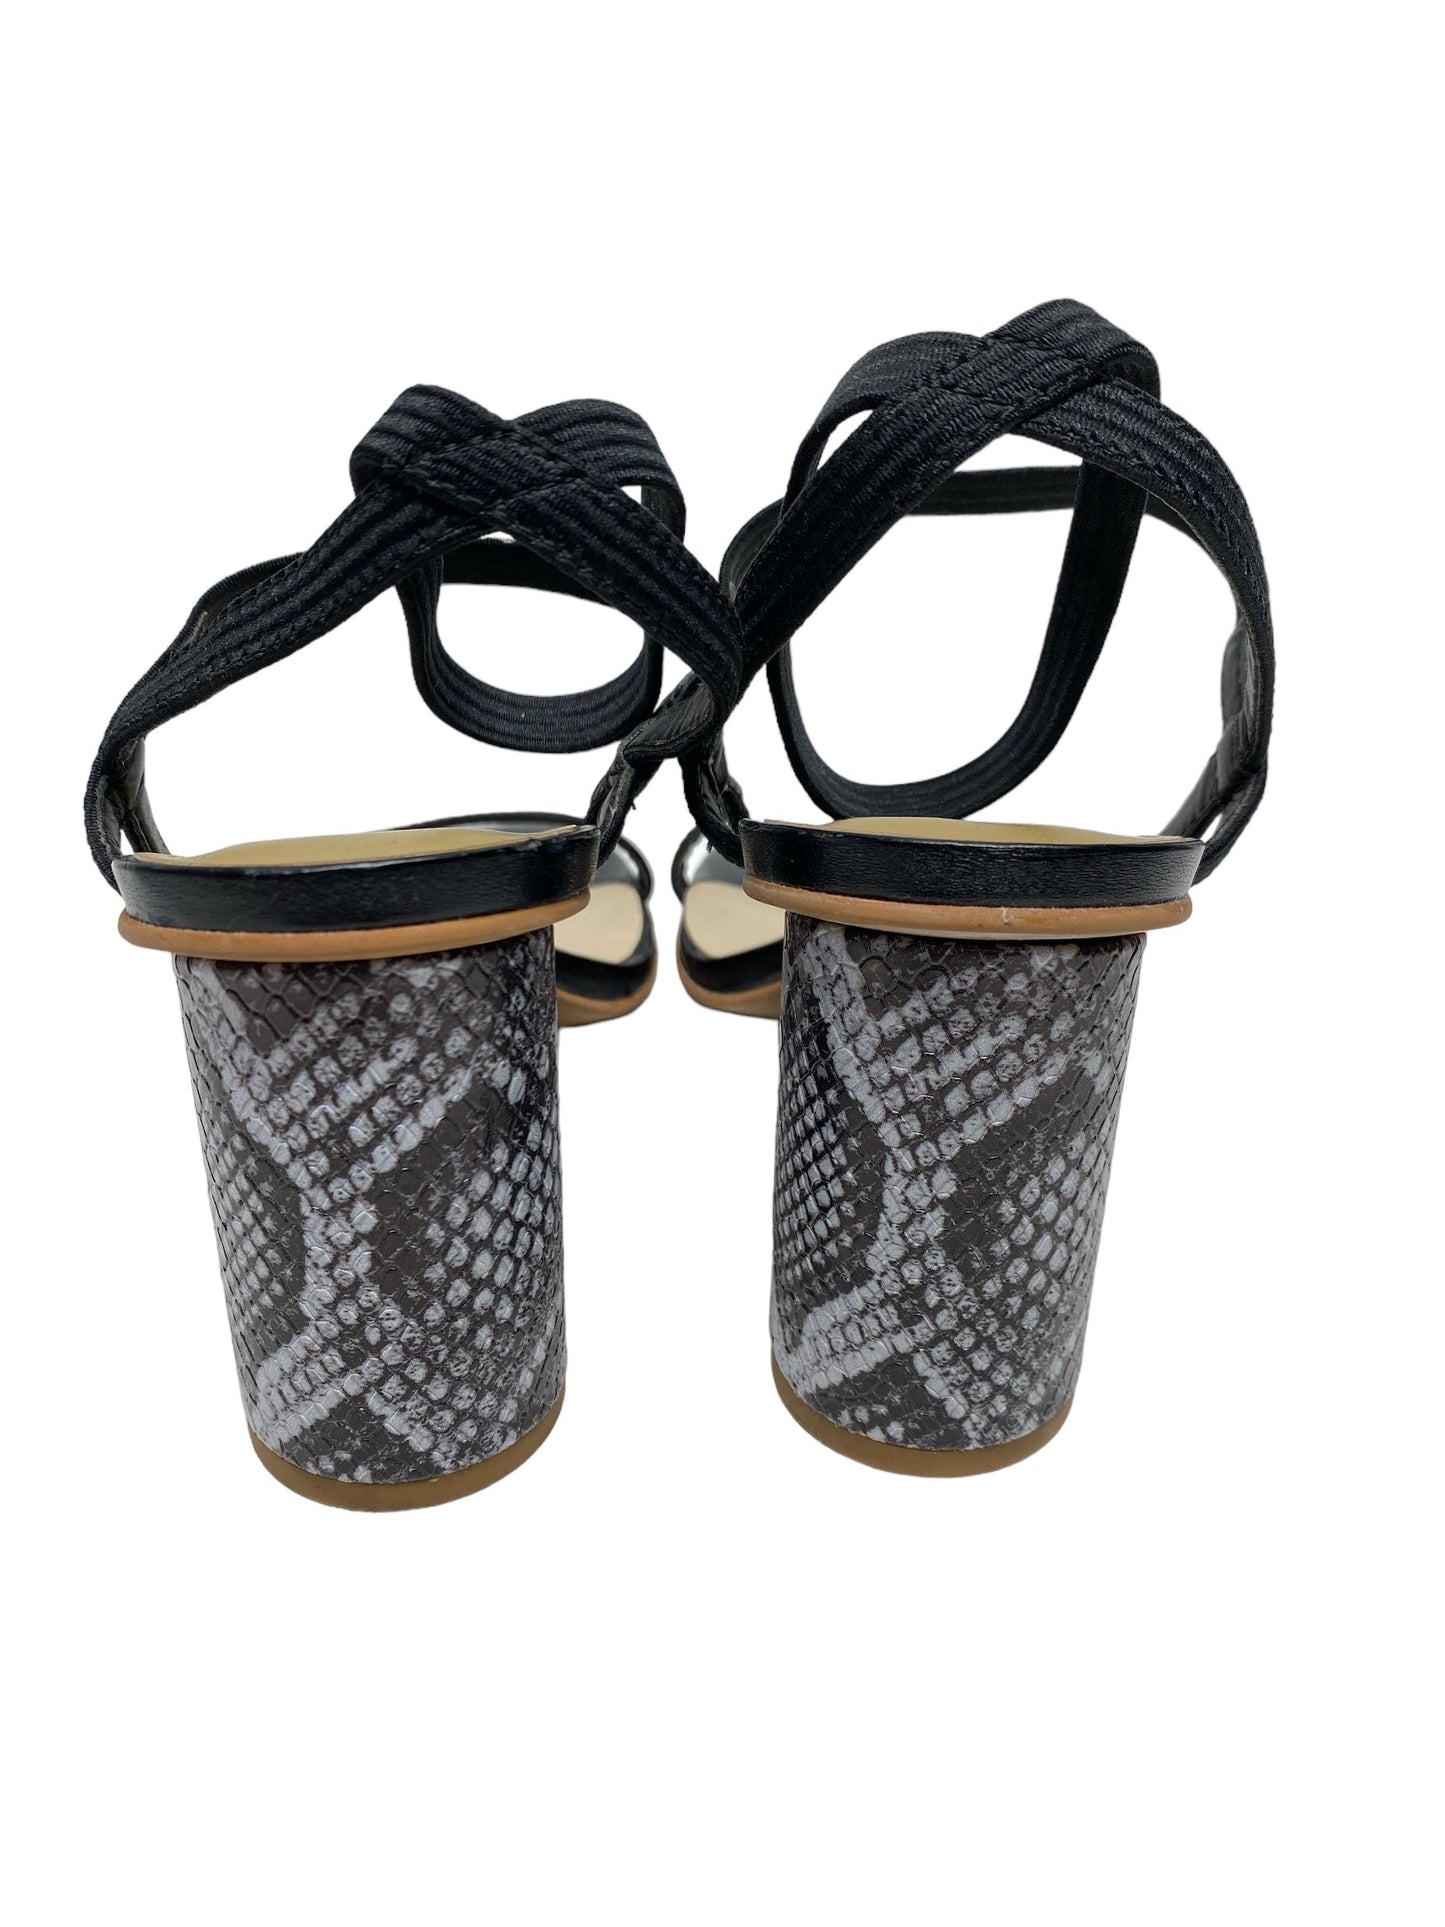 Snakeskin Print Shoes Heels Block Dolce Vita, Size 8.5